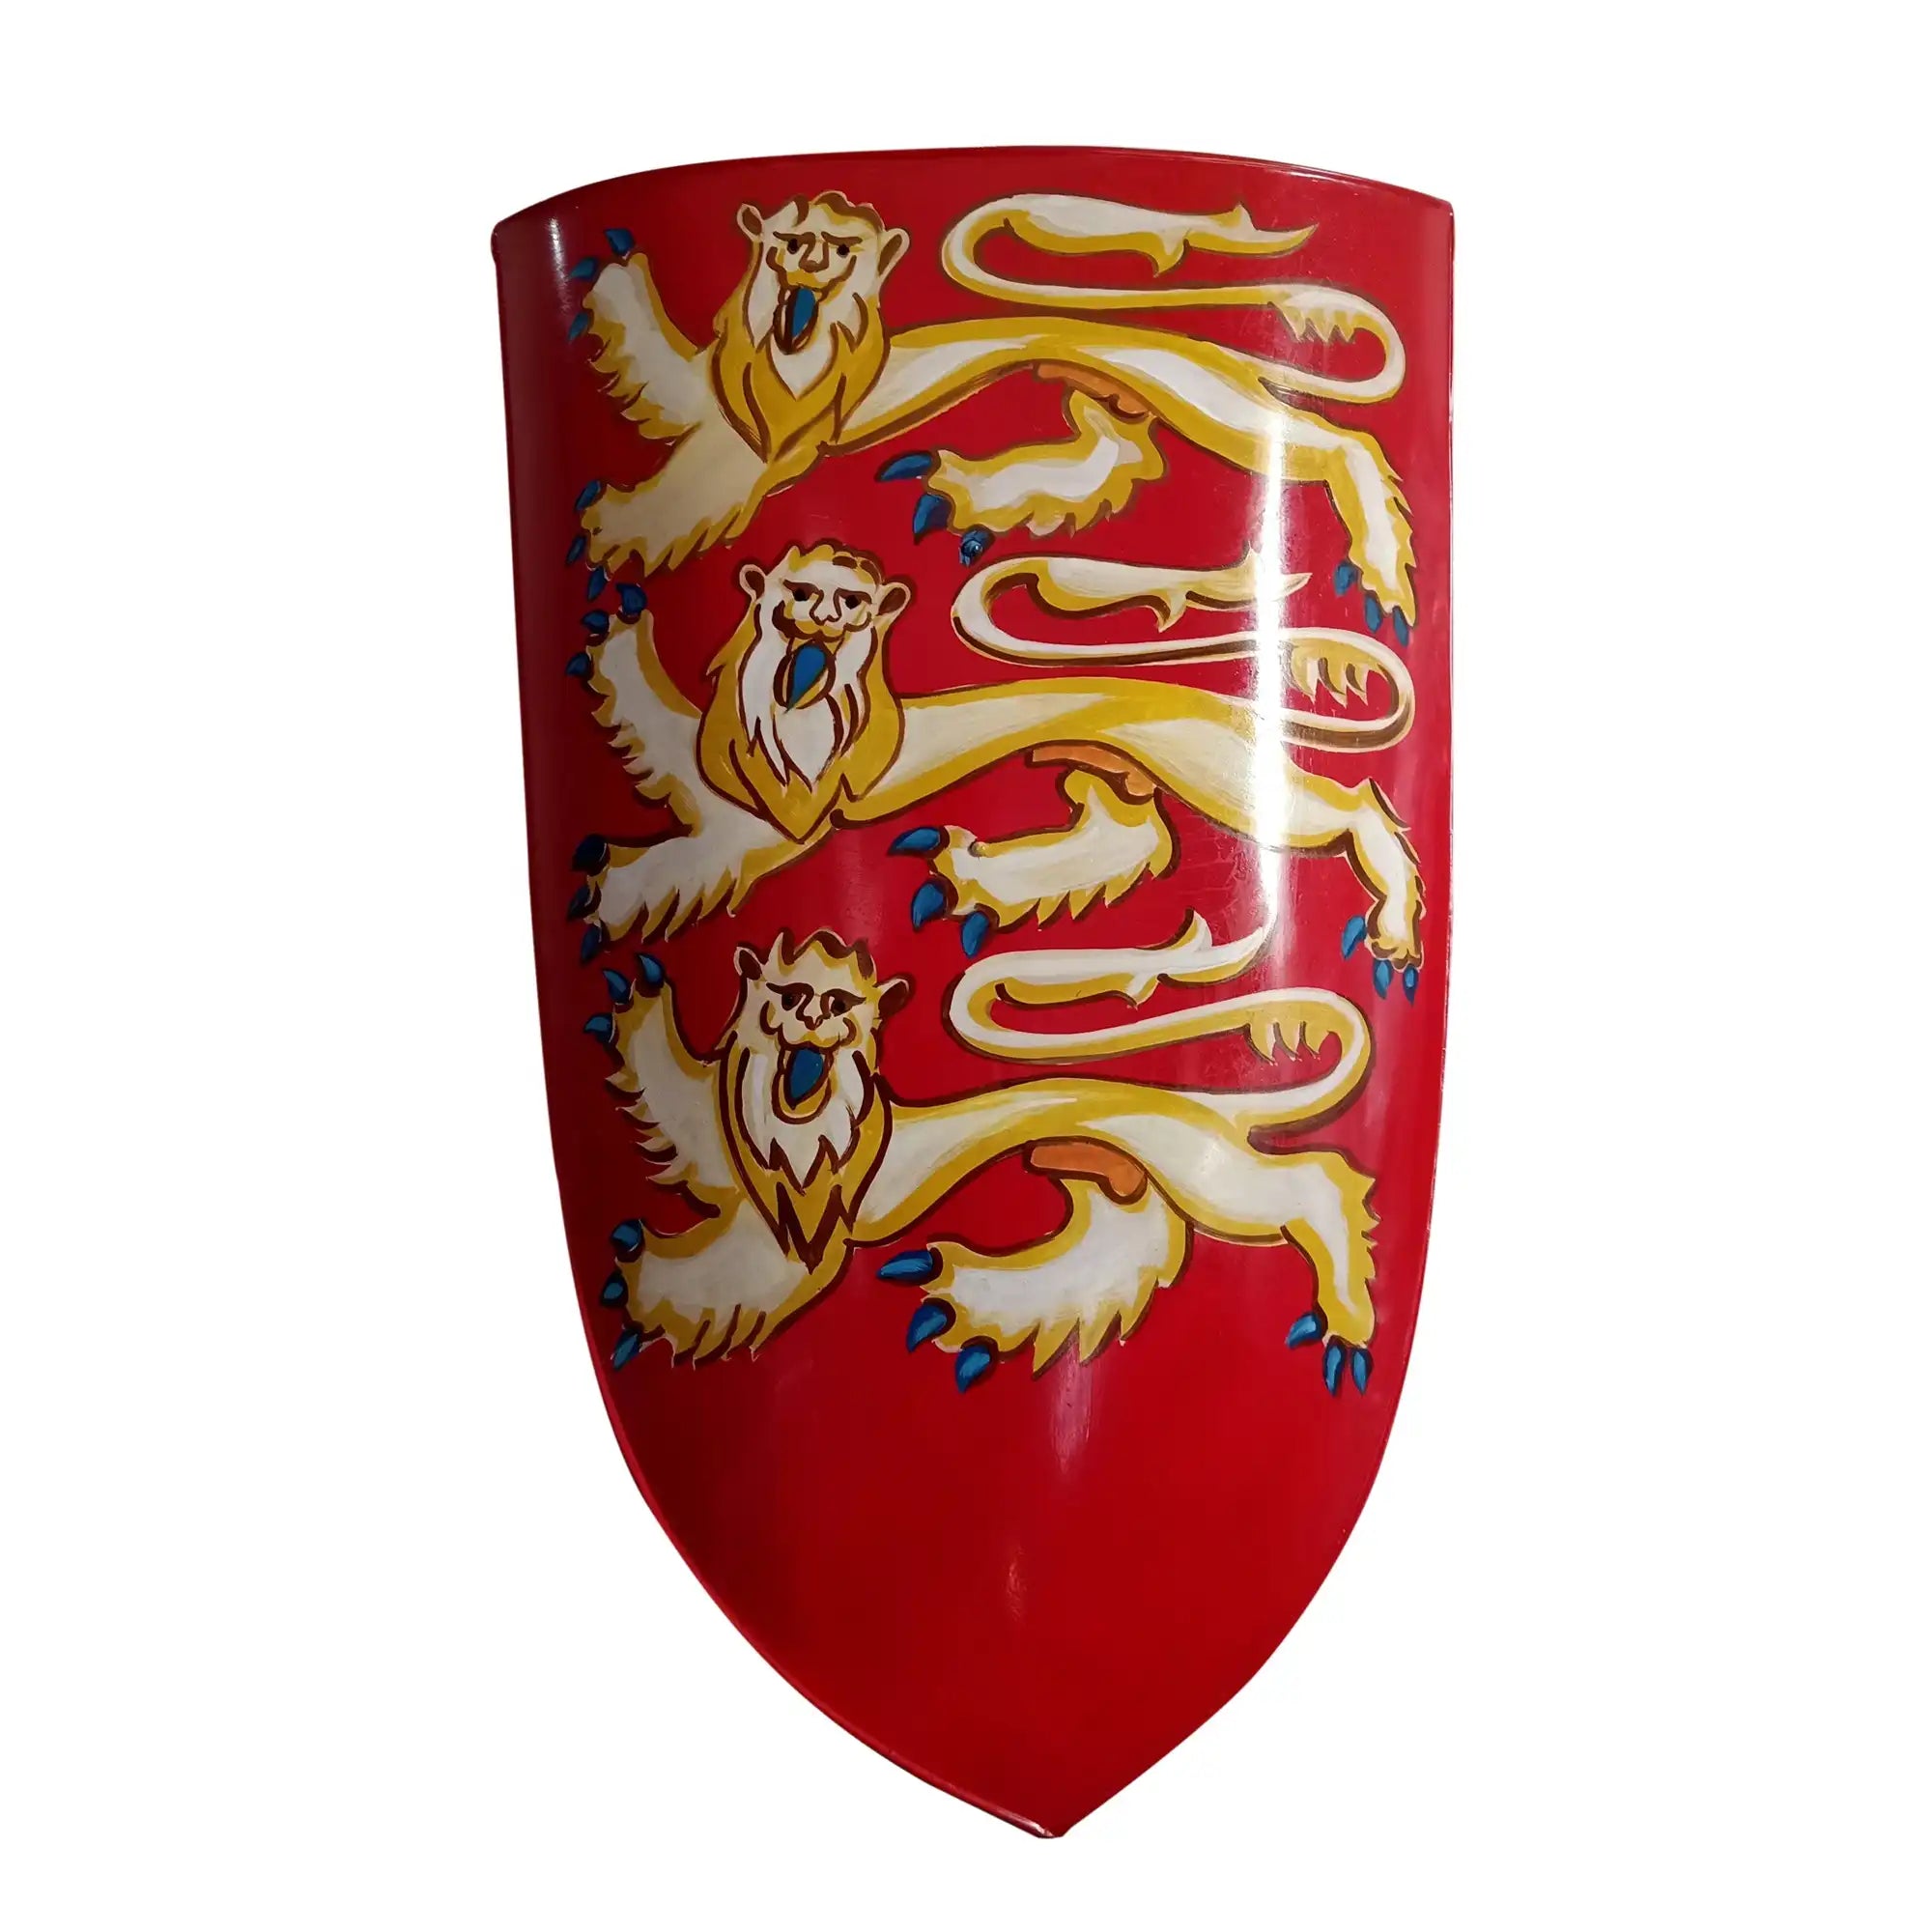 Medieval Armor Renaissance Edward I Shield Red Heater Knights Crusader Shield